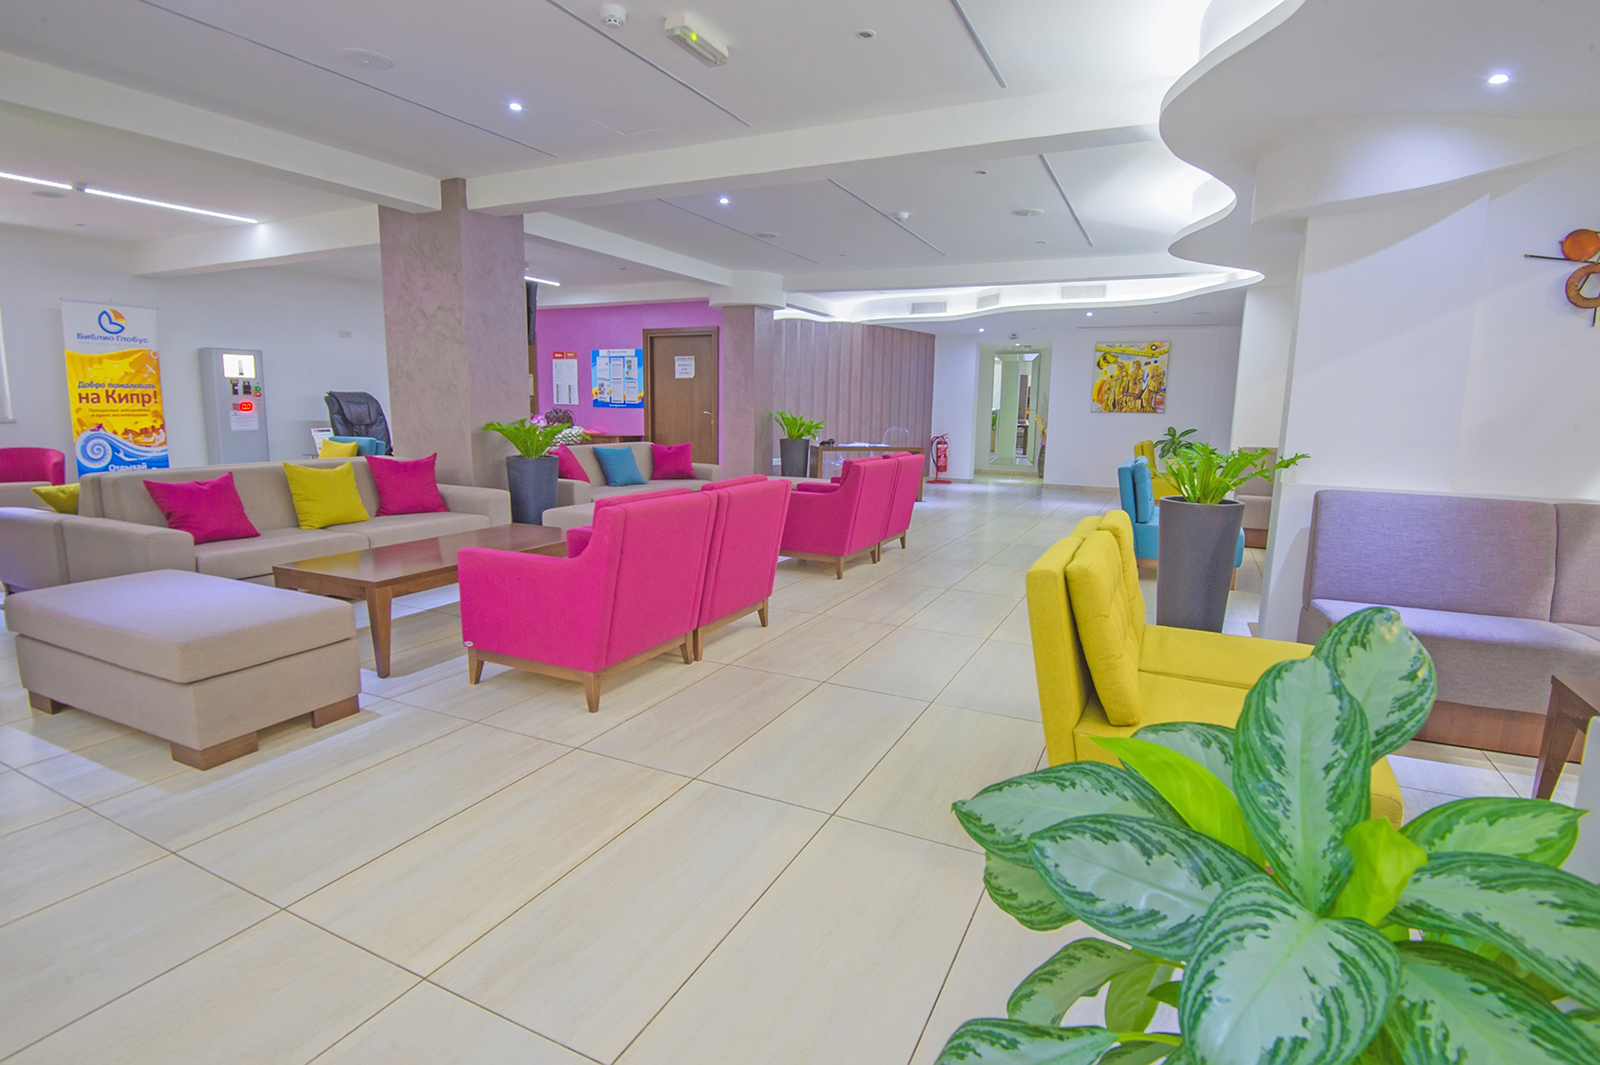 New Famagusta Hotel-Lobby.jpg